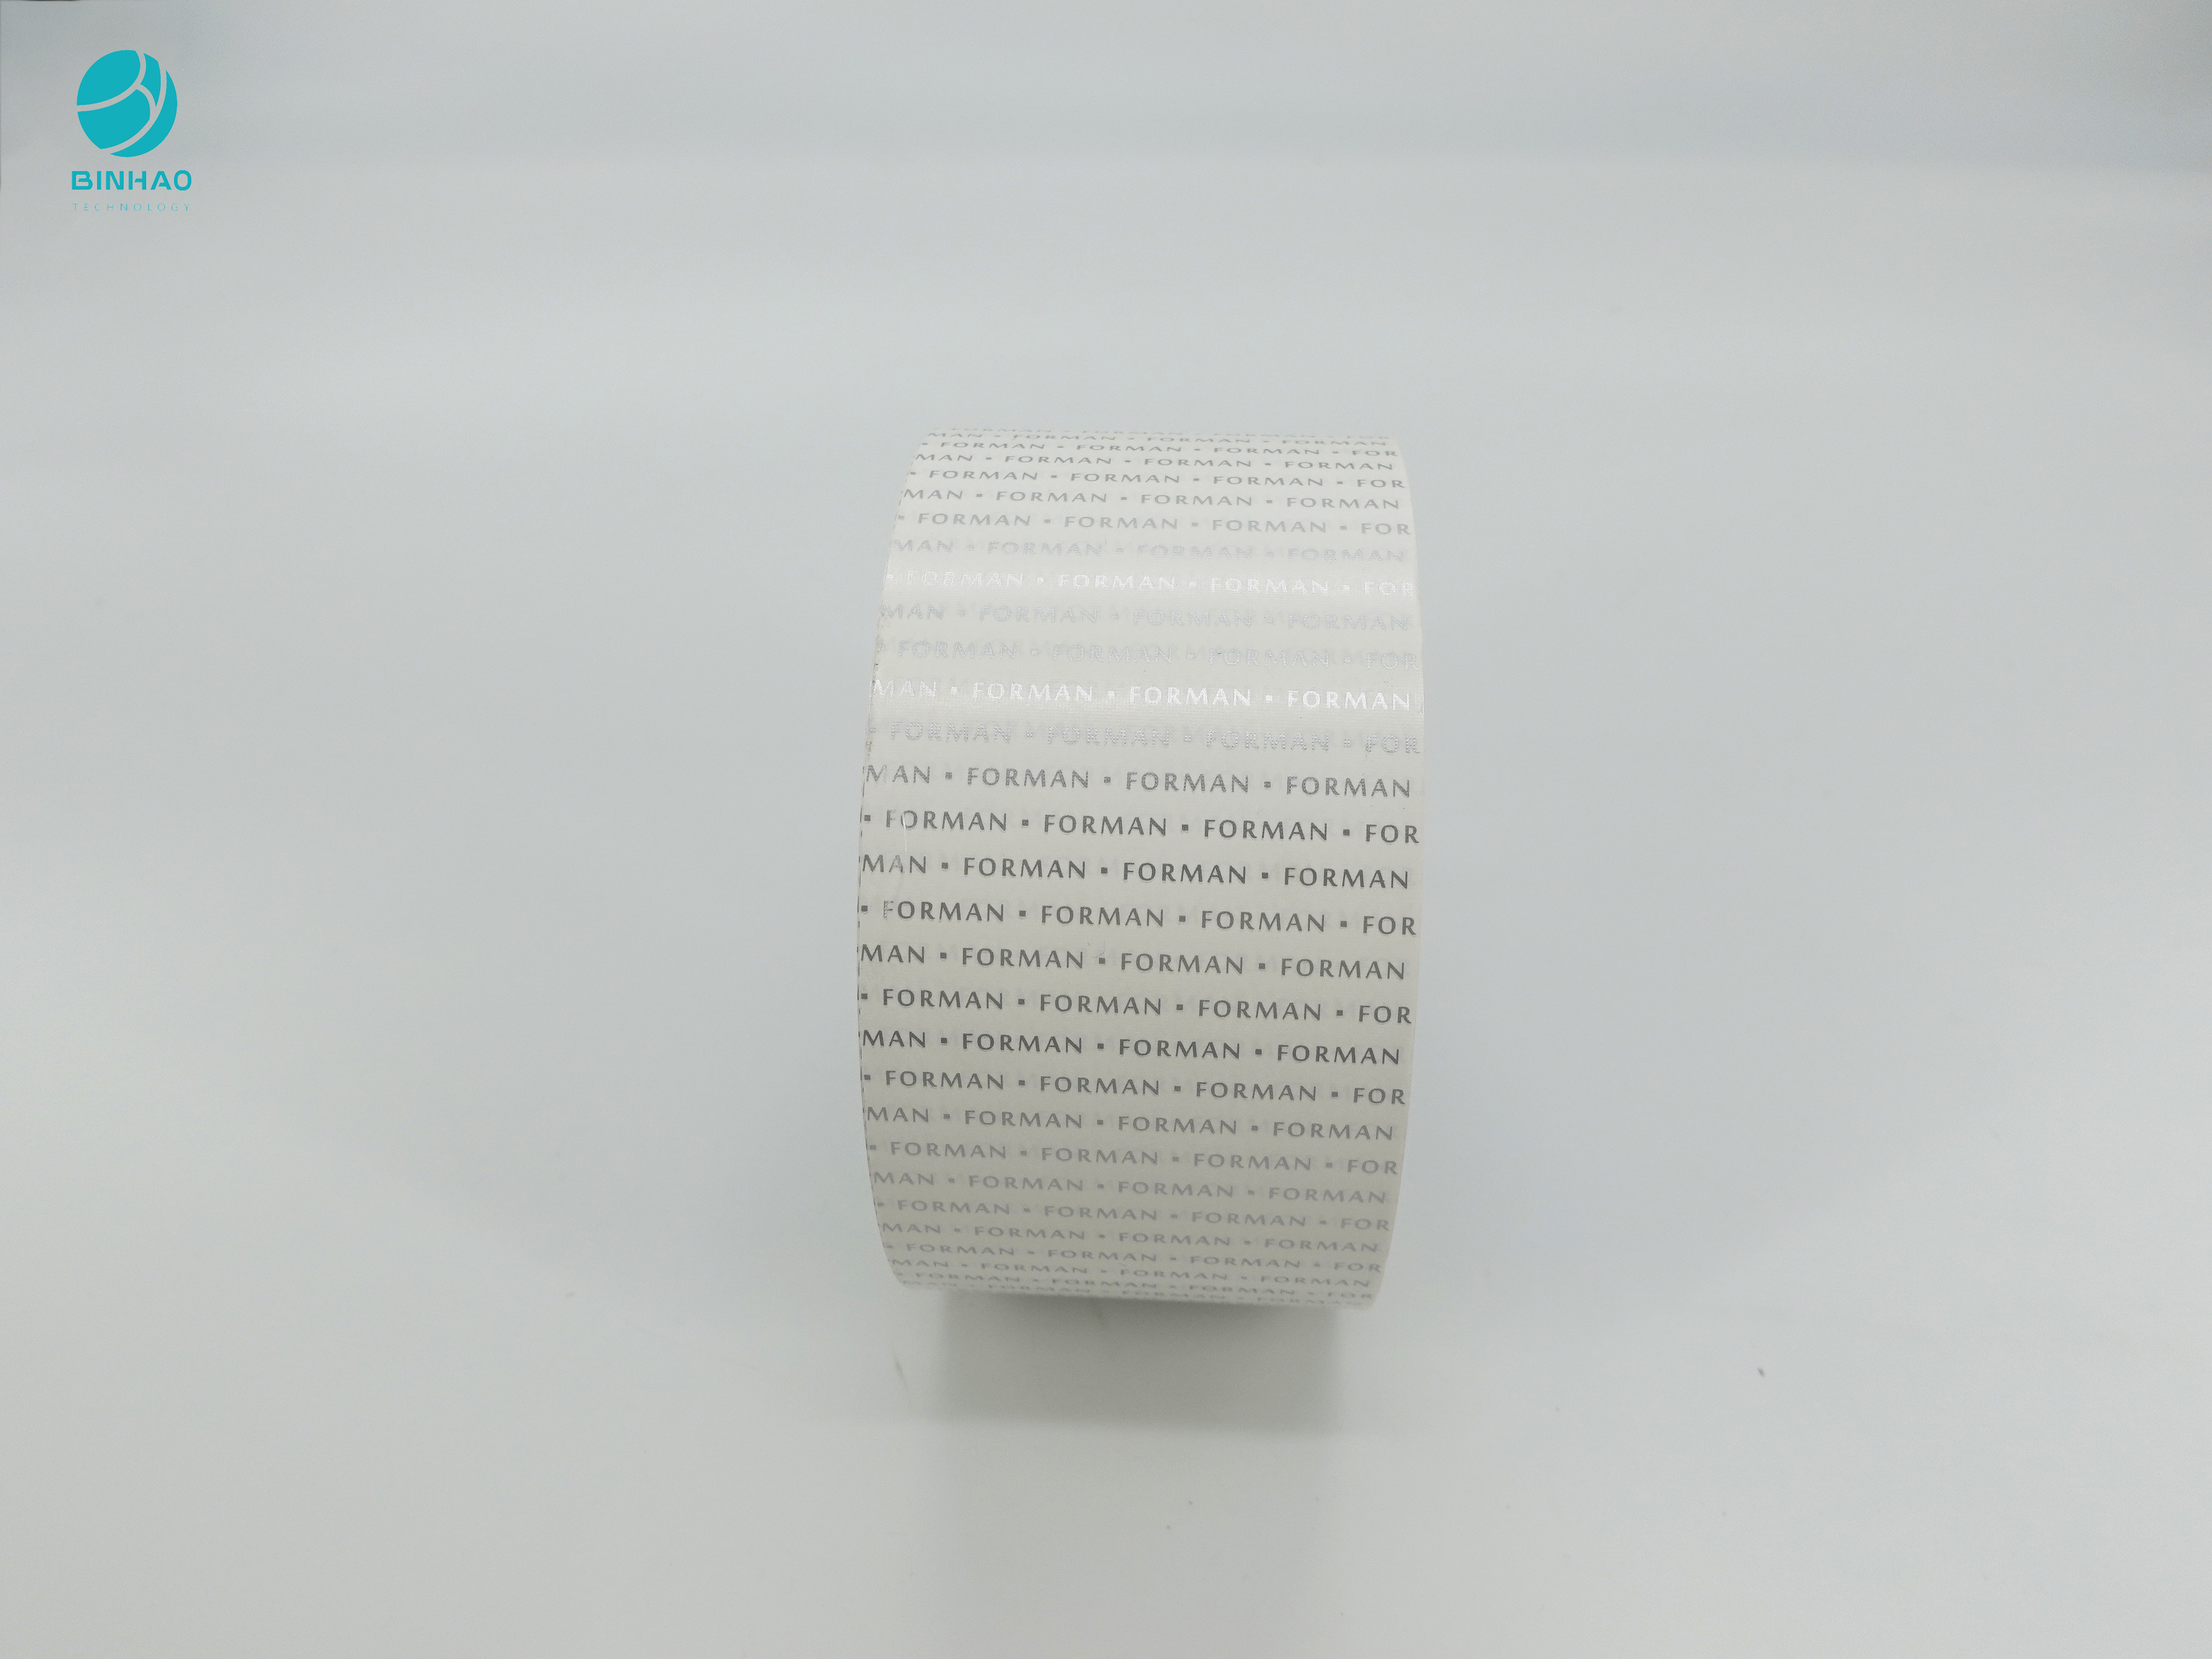 Custom Pattern Printed 58gsm Inner Liner Foil Paper For Cigarette Package